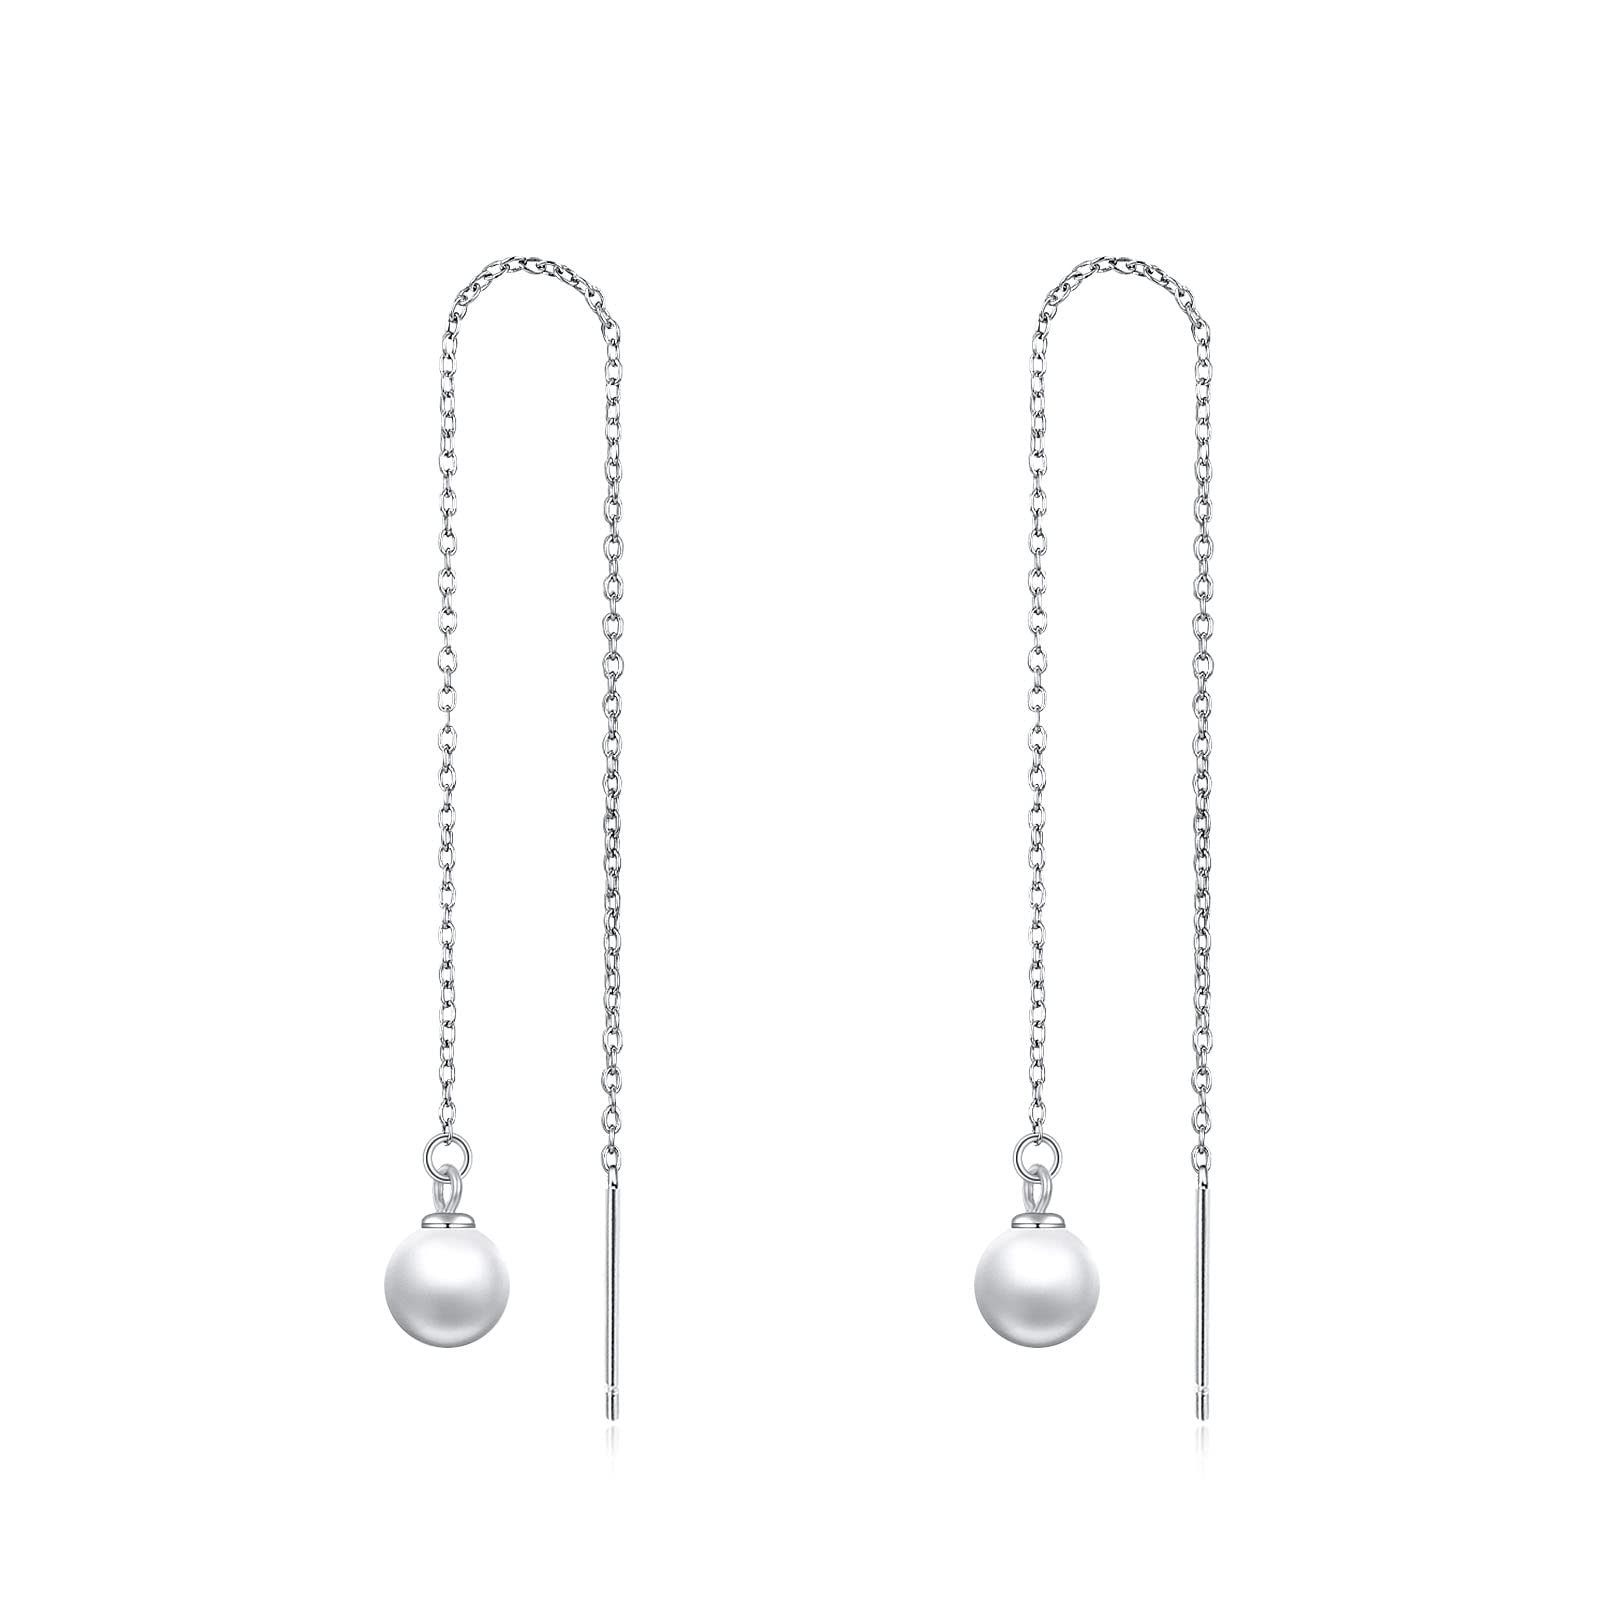 Haiaveng Paar Ohrhänger Ohrringe Silber Fallen Hängend - Ohrringe Durchzieher aus Damen, 925 Sterling Silber